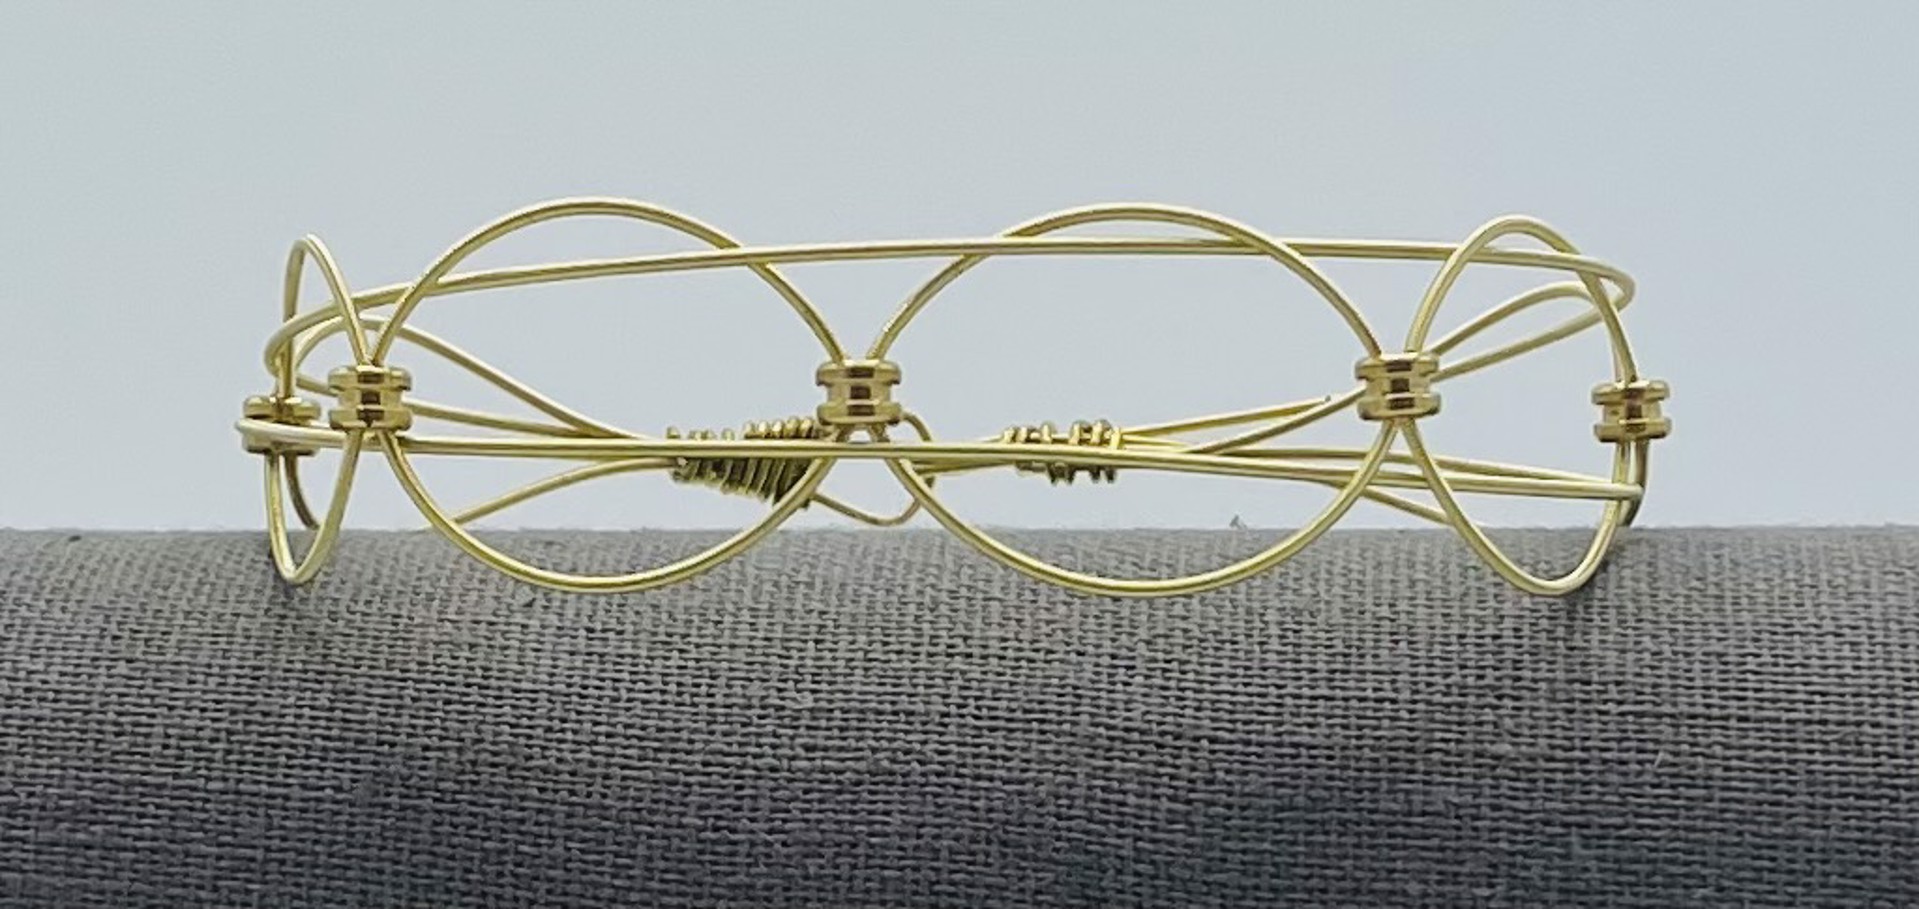 Guitar String Bracelet by String Thing Designs